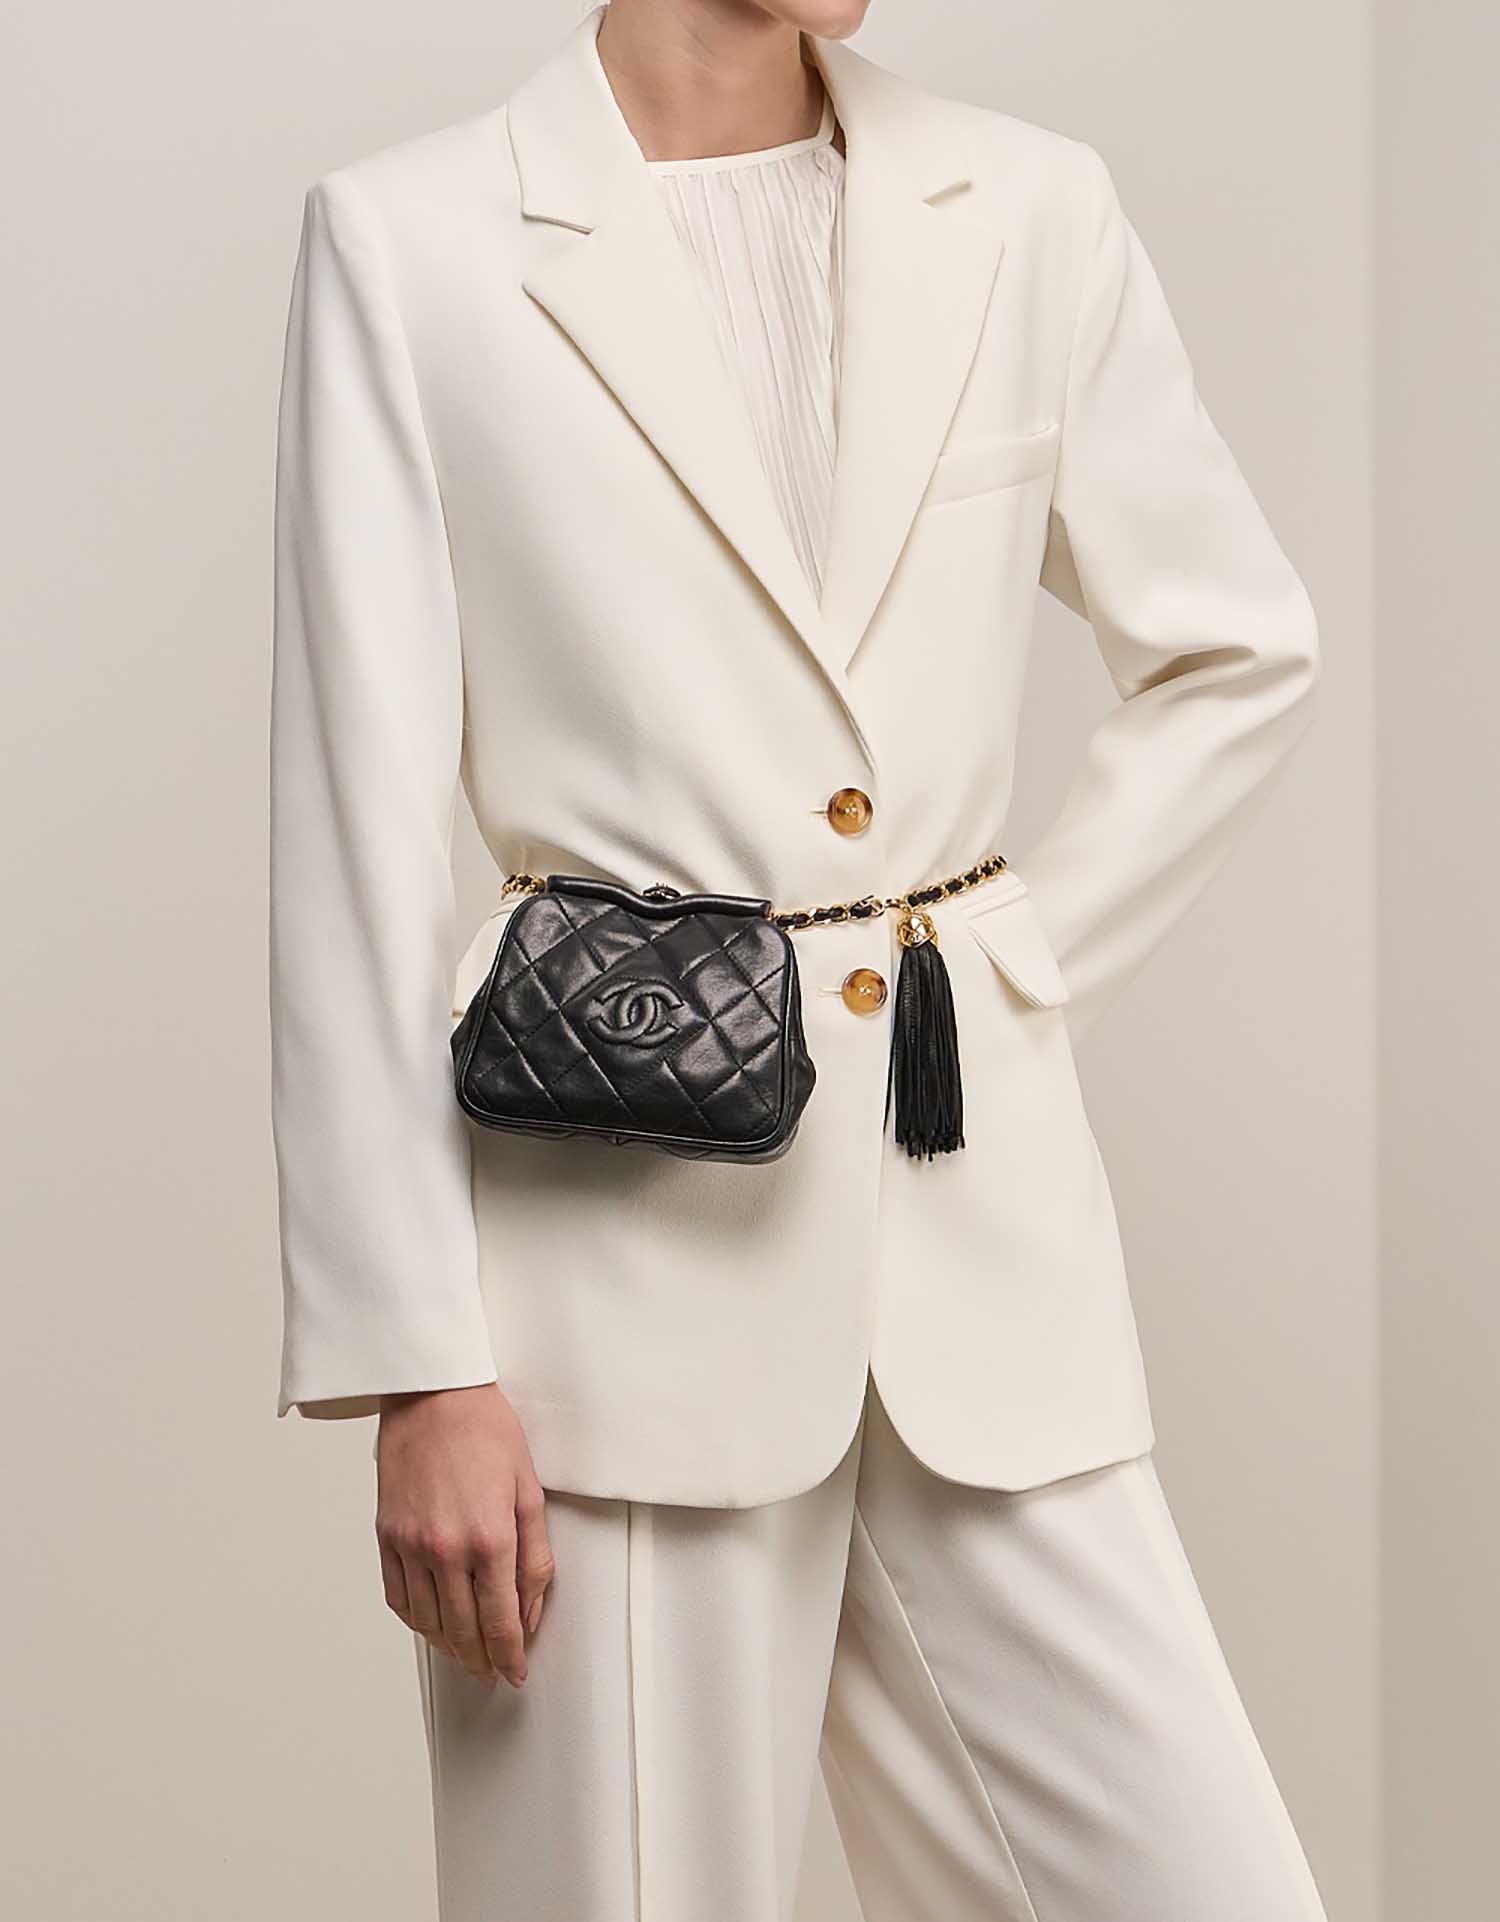 Chanel TimelessBeltBag OneSize Black on Model | Sell your designer bag on Saclab.com